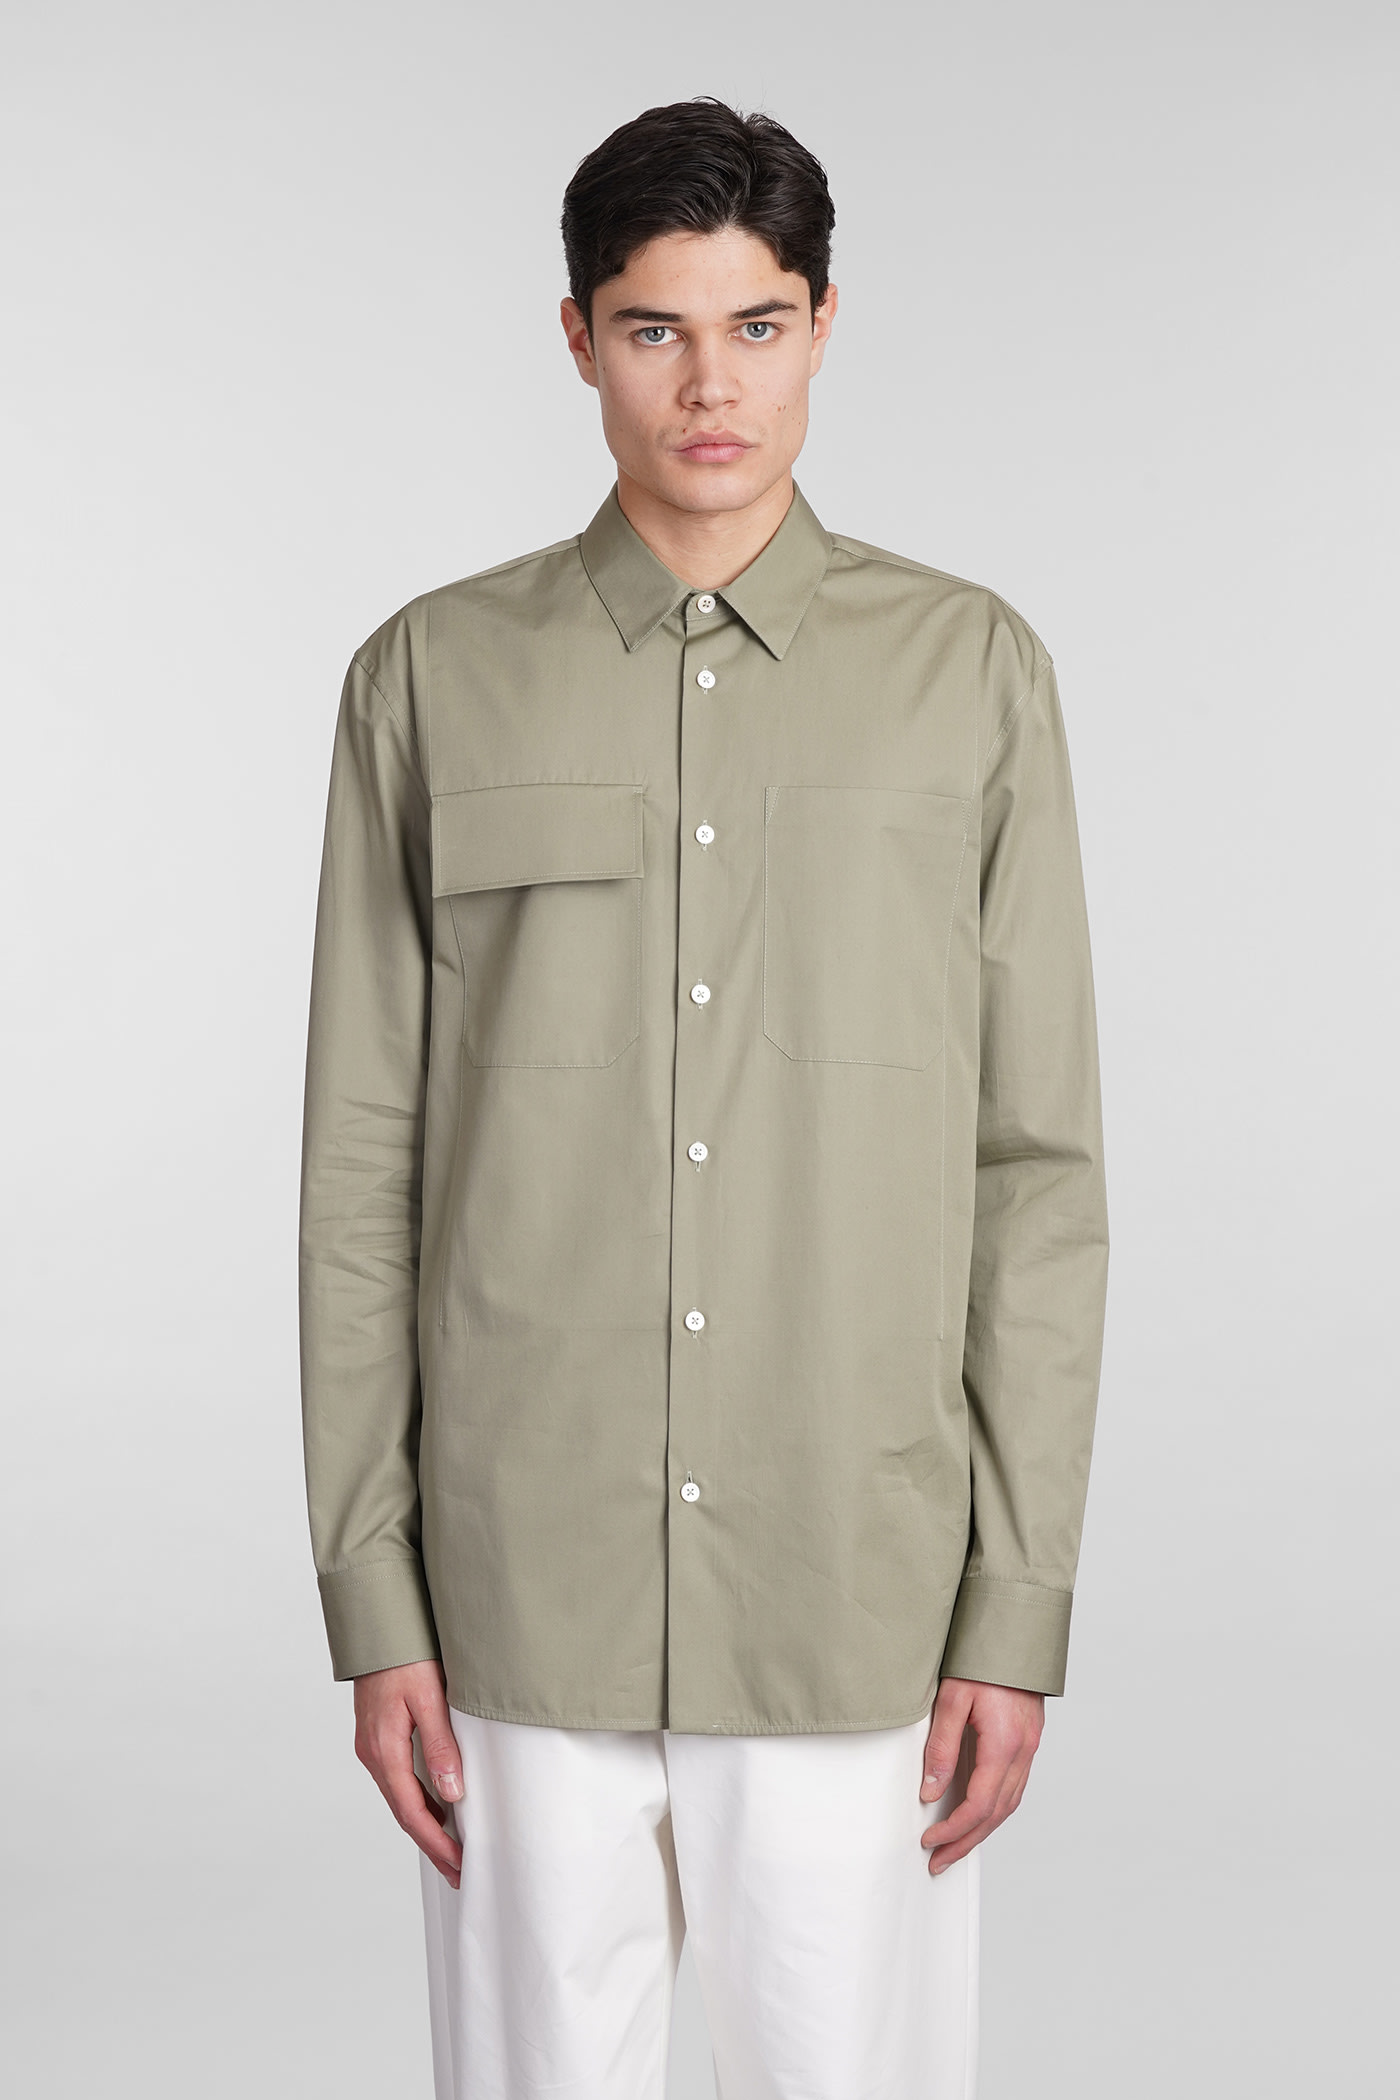 Jil Sander Shirt In Khaki Cotton